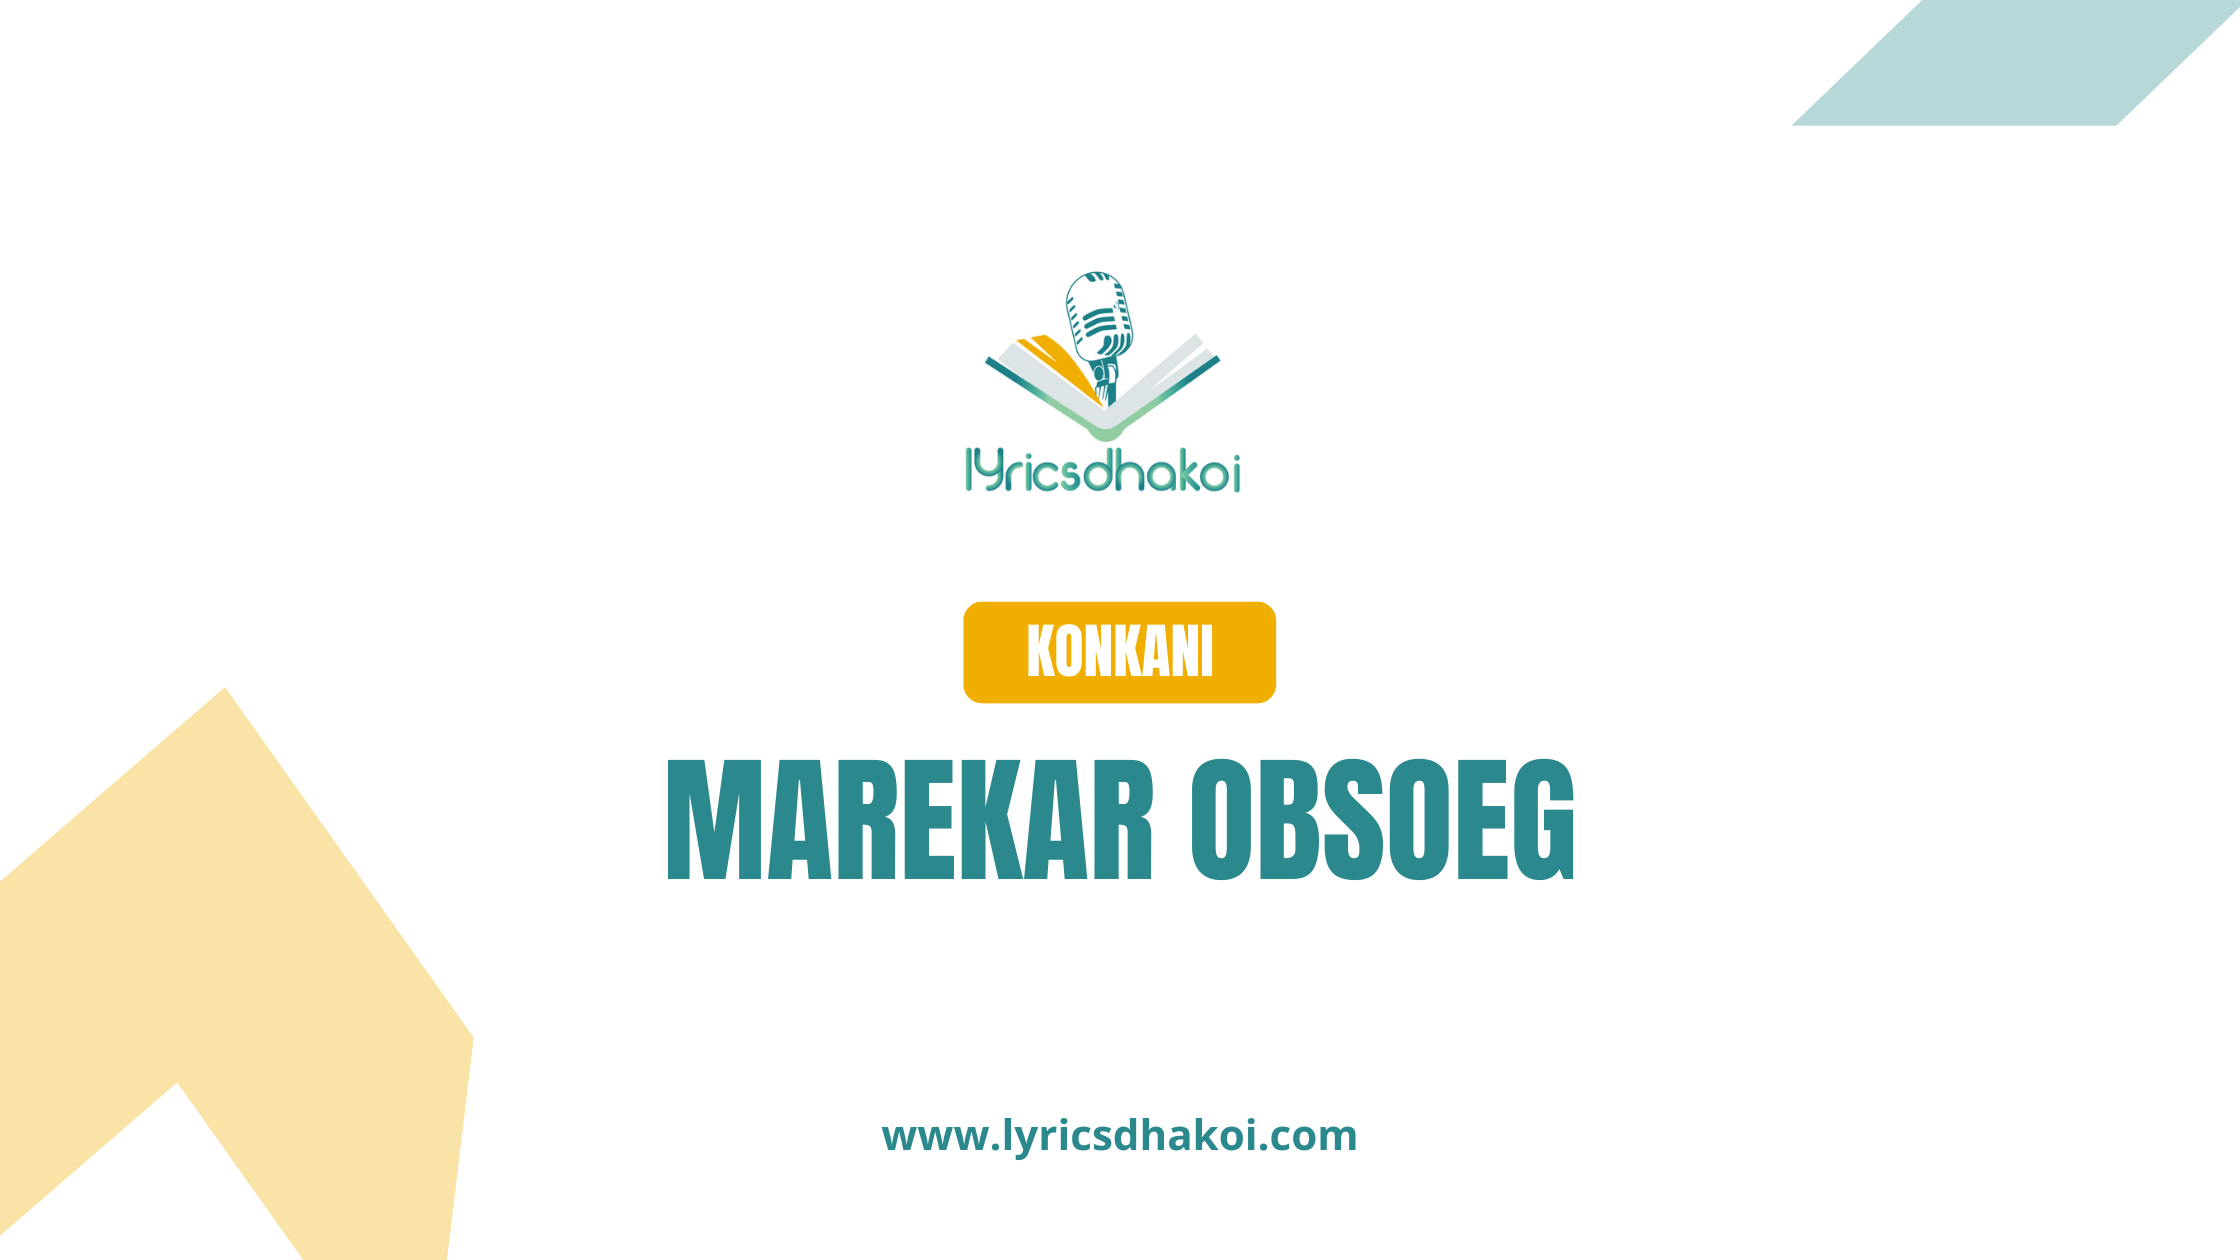 Marekar Obsoeg Konkani Lyrics for Karaoke Online - LyricsDhakoi.com